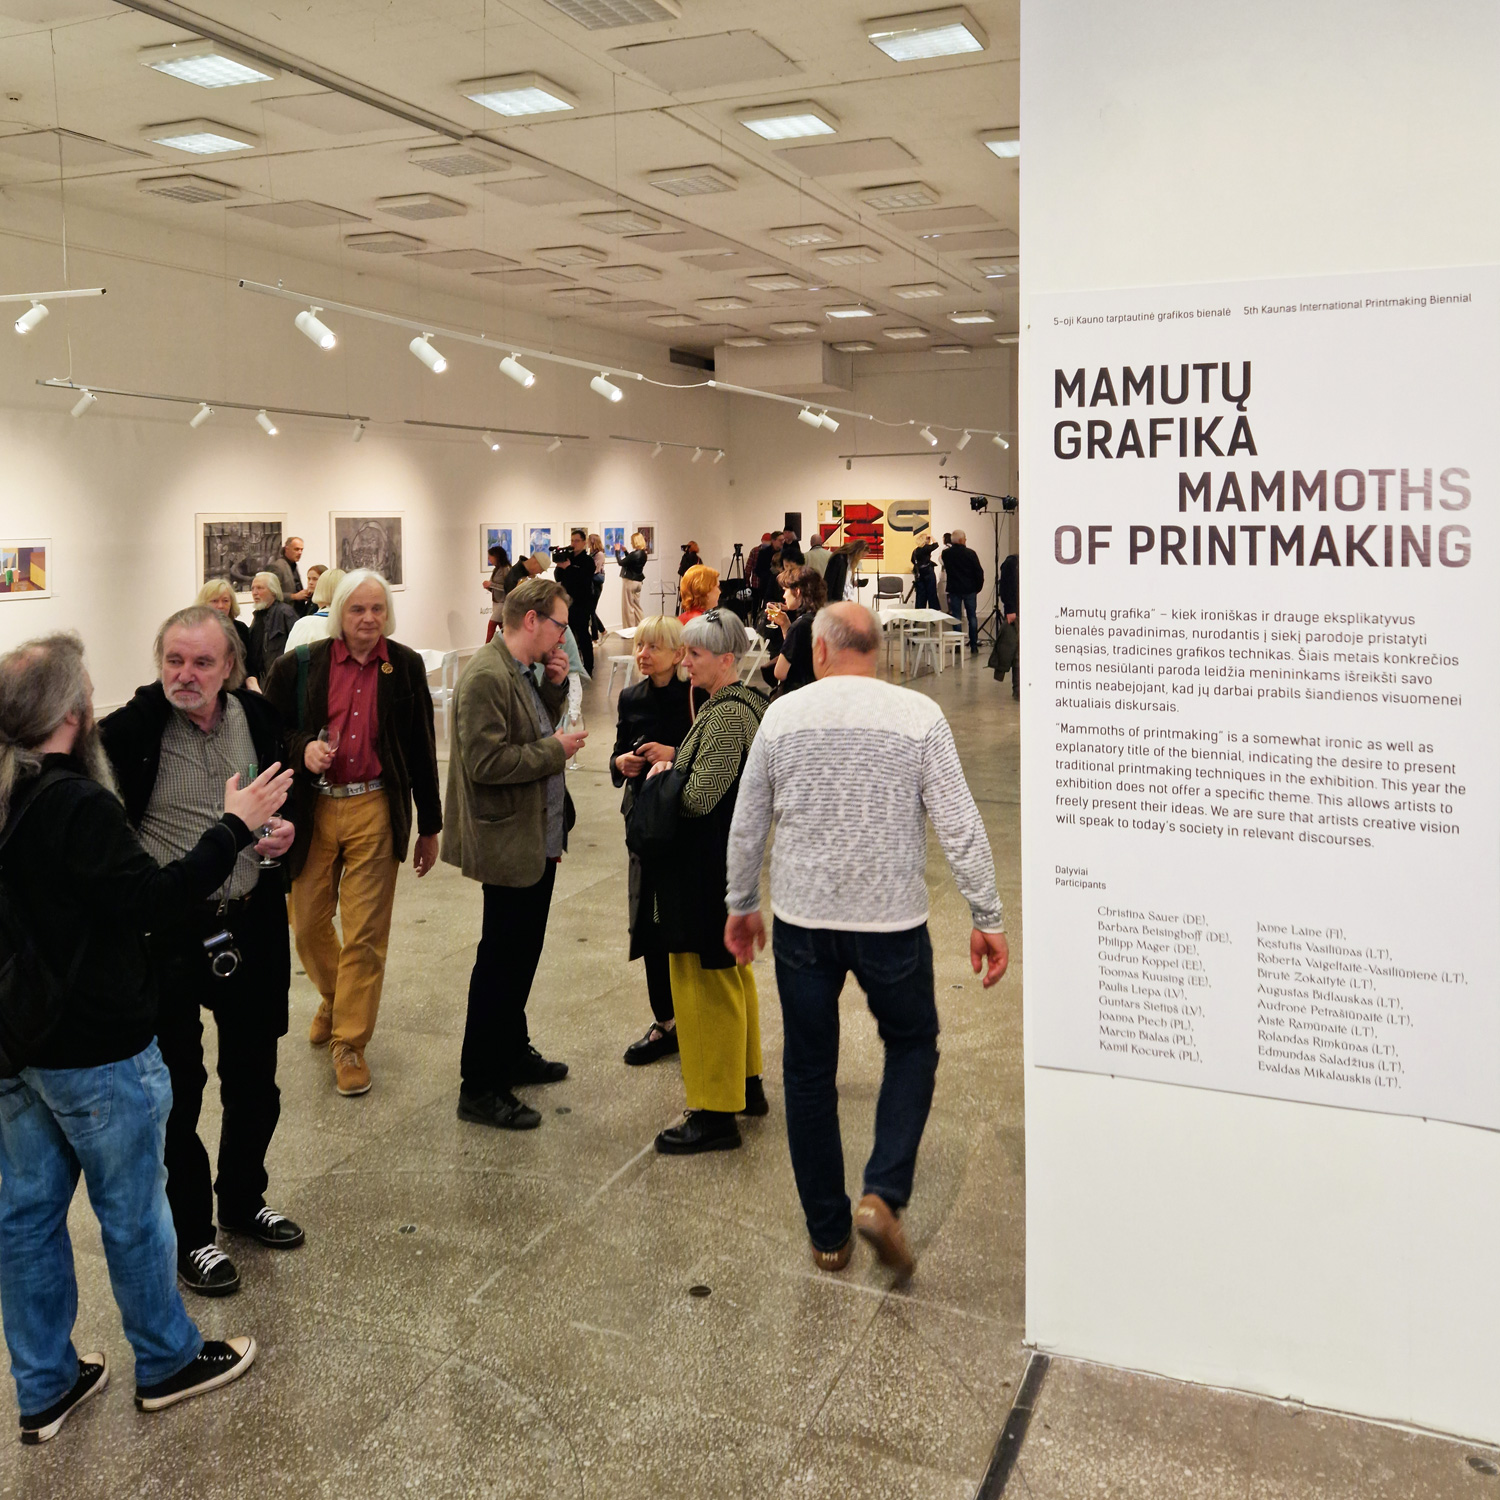 MAMMOTHS OF PRINTMAKING | Kaunas picture gallery [LT] | Foto: Simonas Mikalauskis [Koordinator] | Ausstellungseröffnung 5